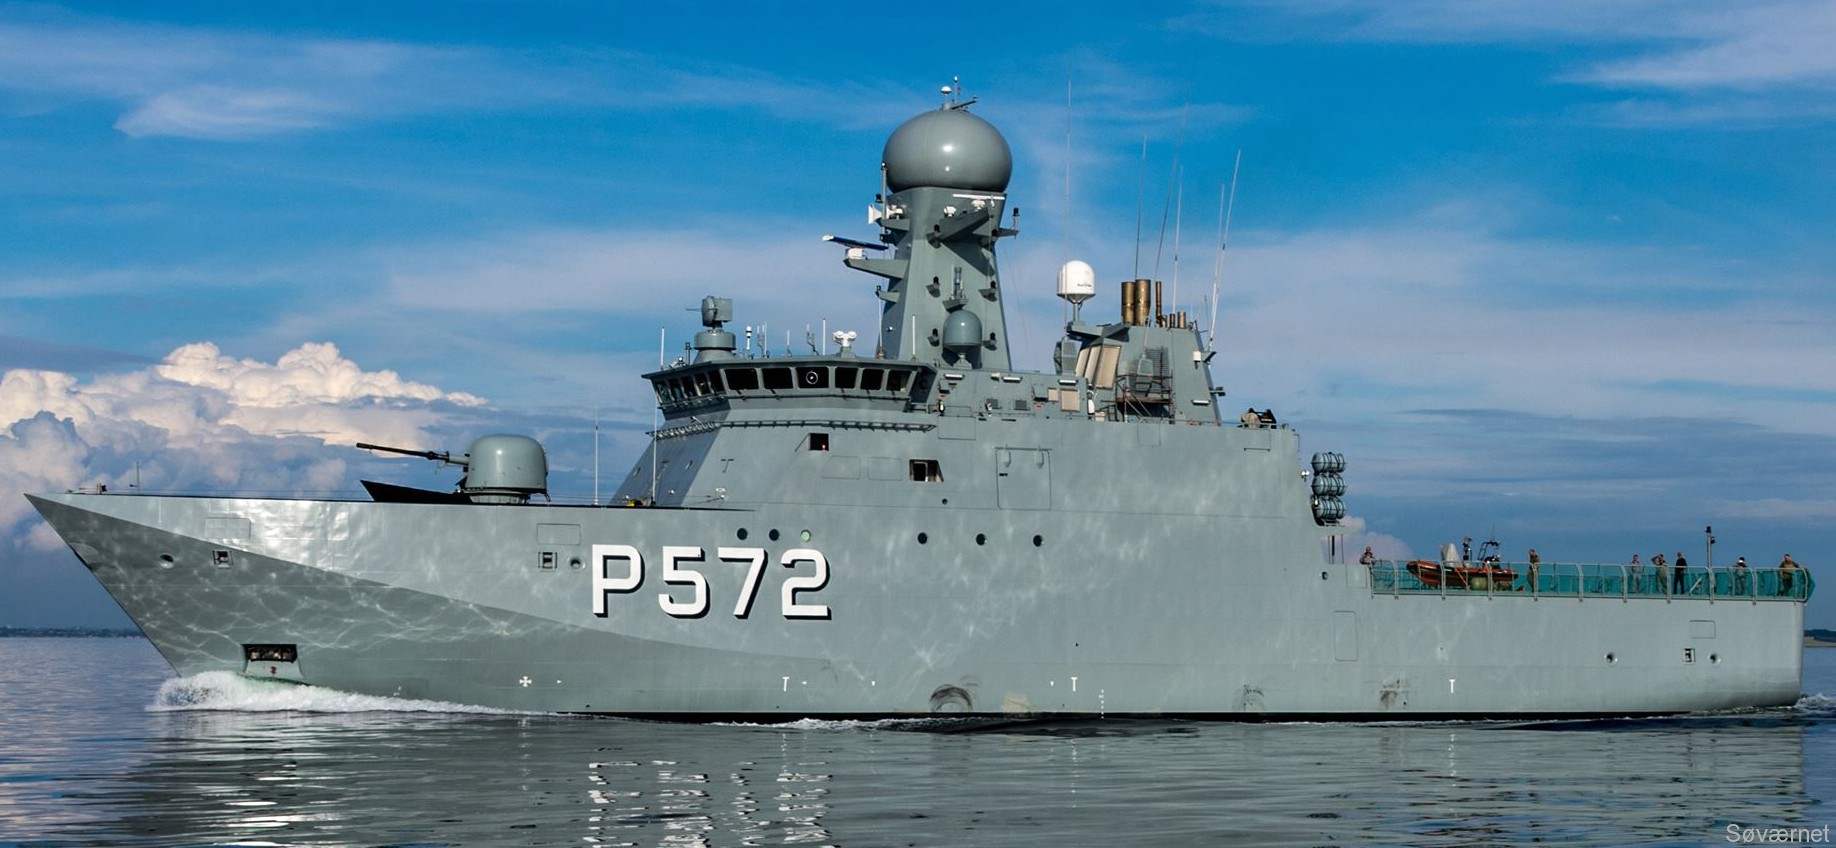 p-572 hdms lauge koch knud rasmussen class offshore patrol vessel royal danish navy 08x